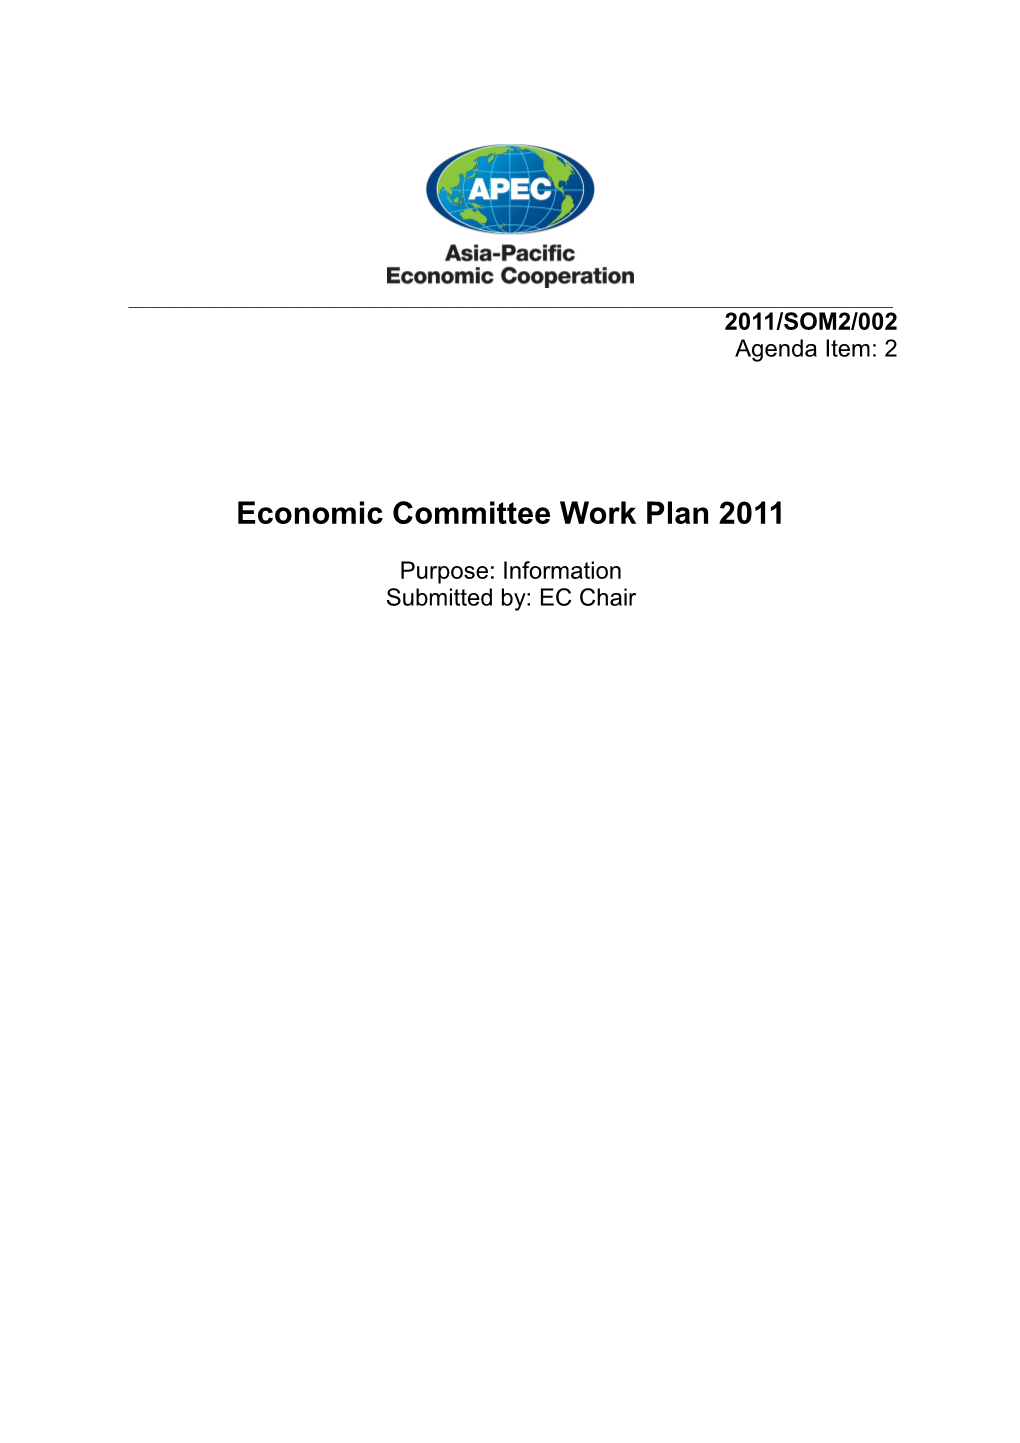 Economic Committee Work Plan 2011